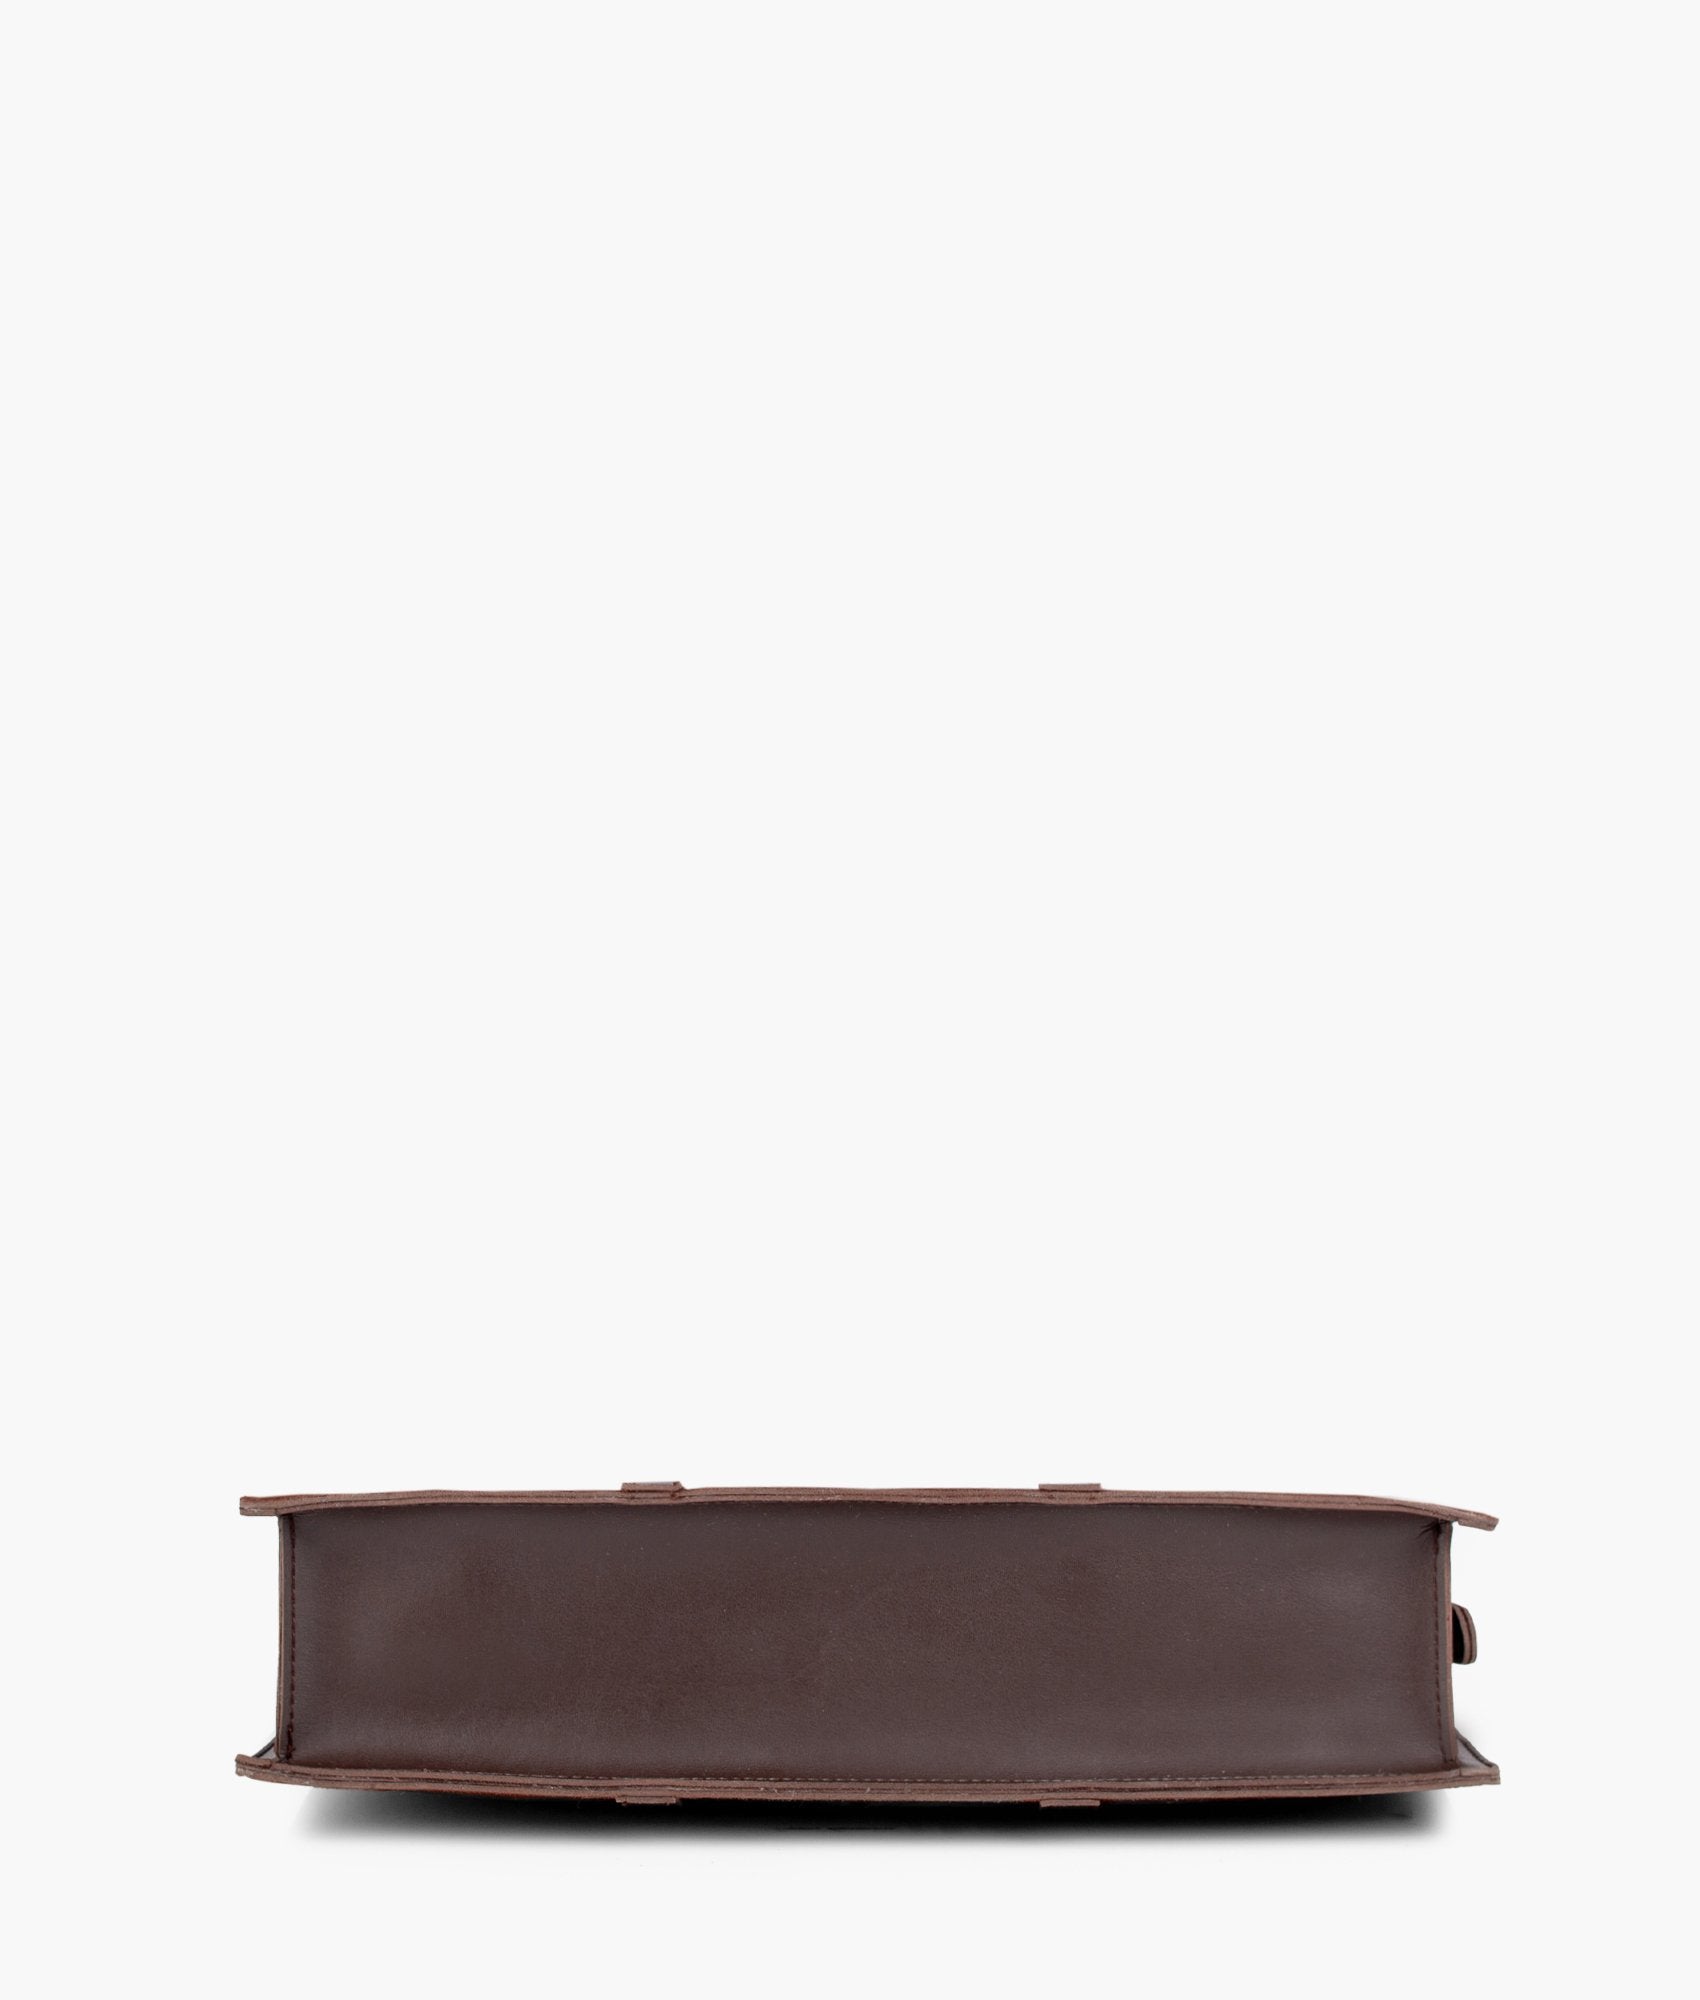 Dark brown suede laptop bag